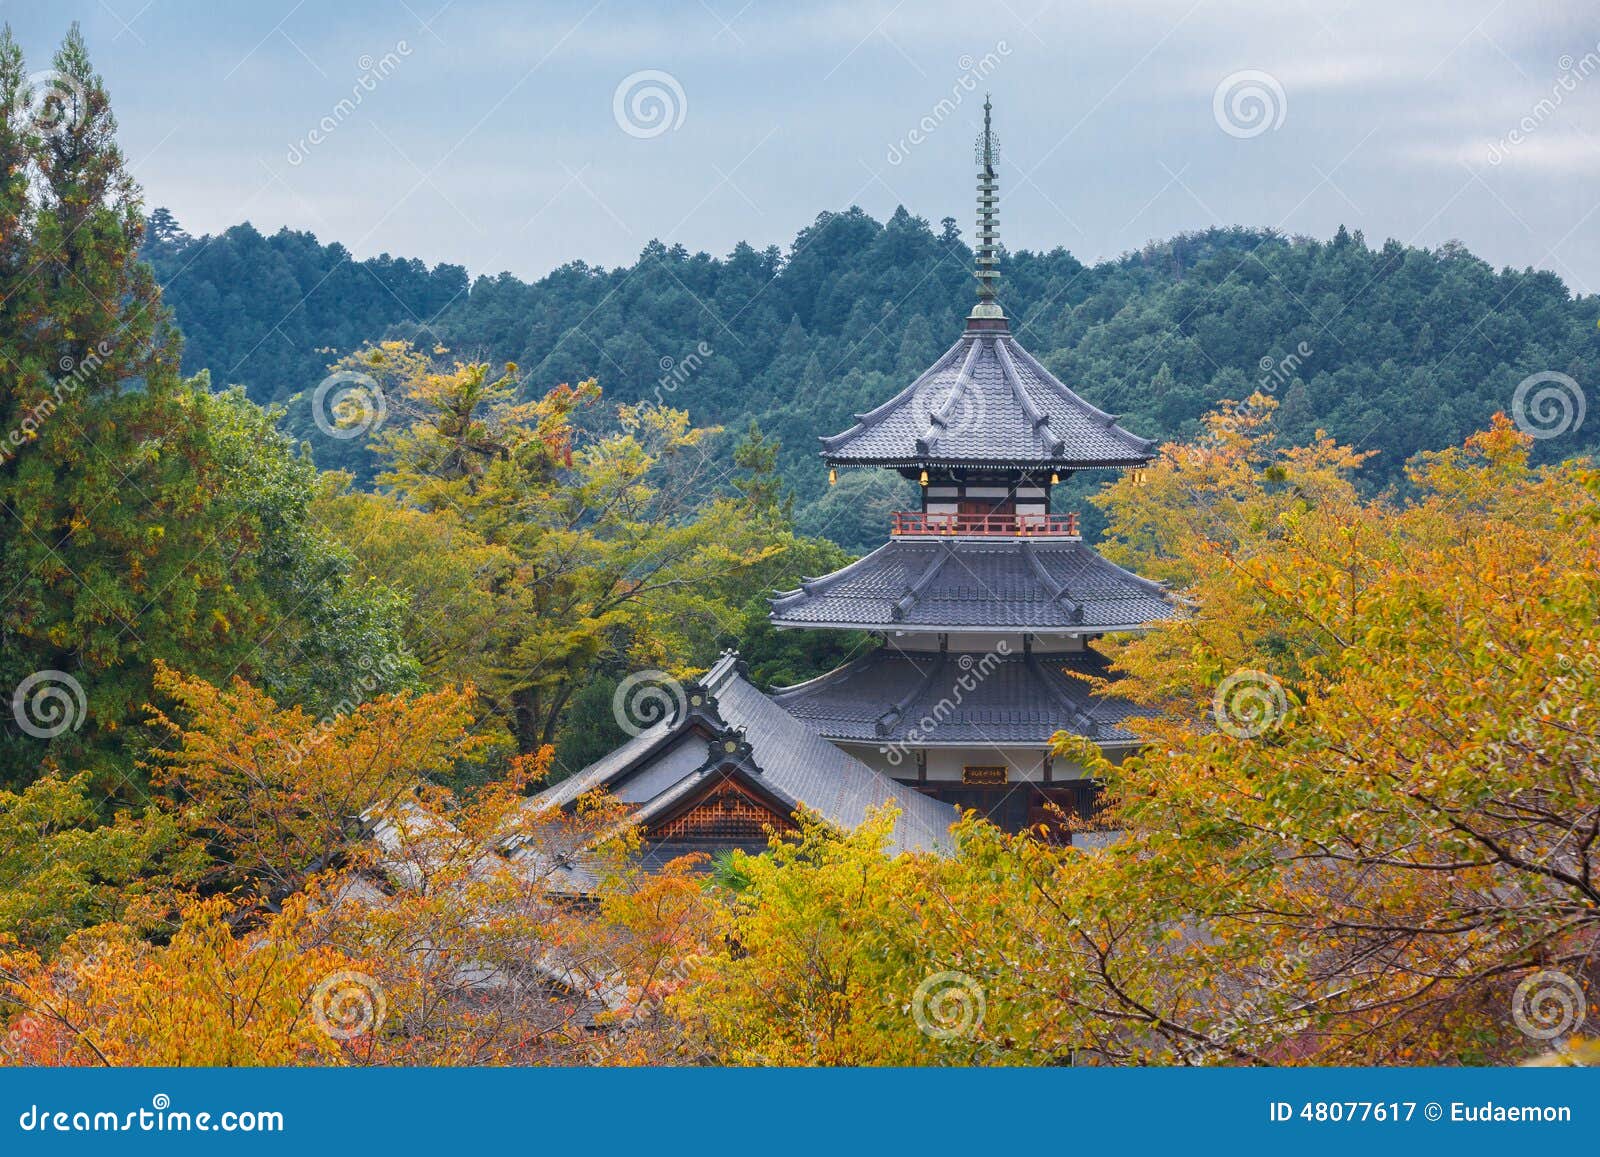 japanese shinto shrine in autumn